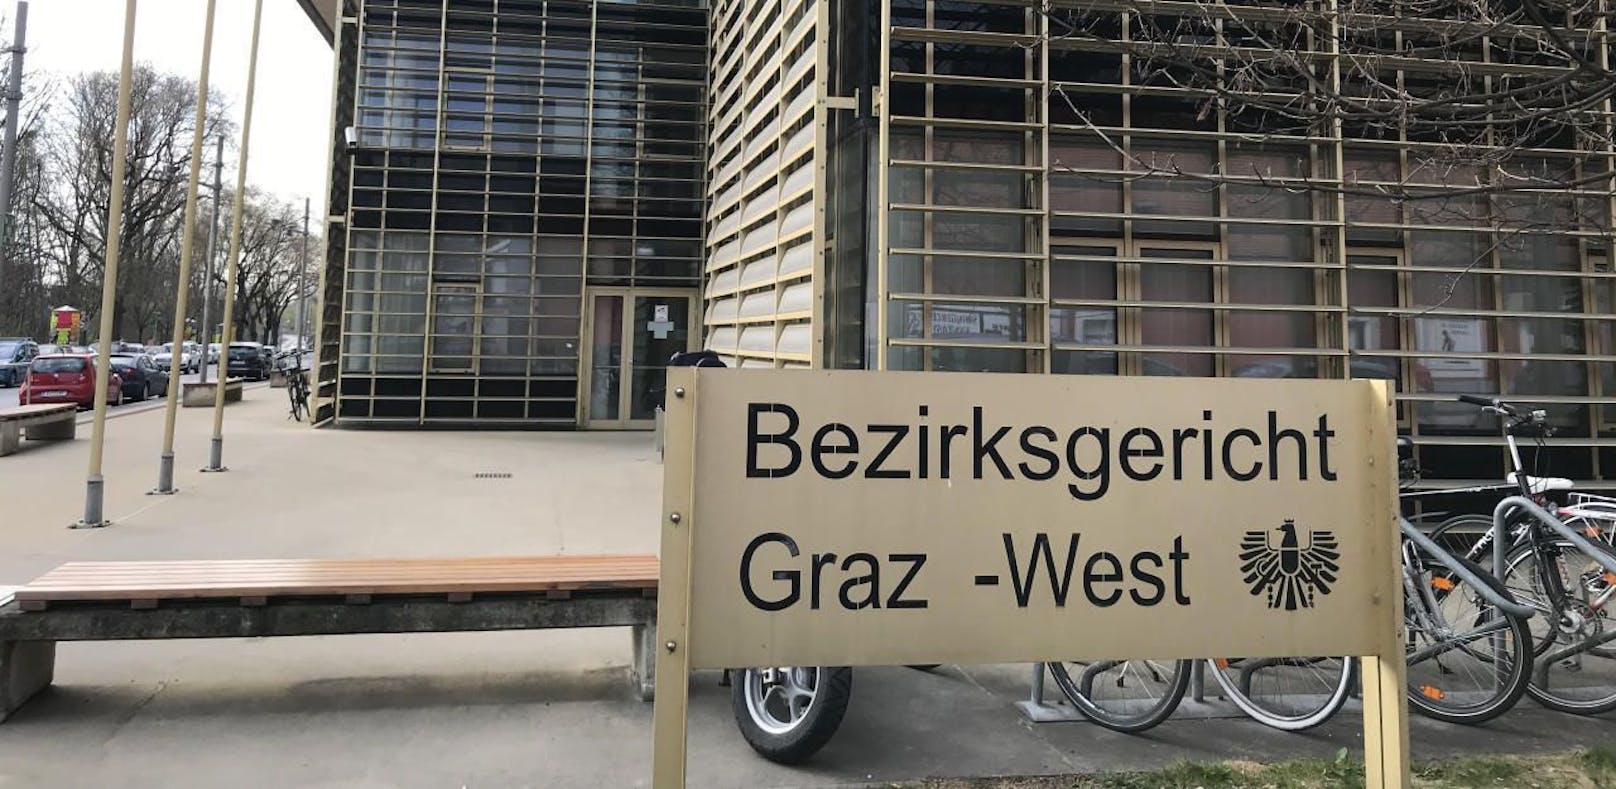 Das Bezirksgericht Graz-West